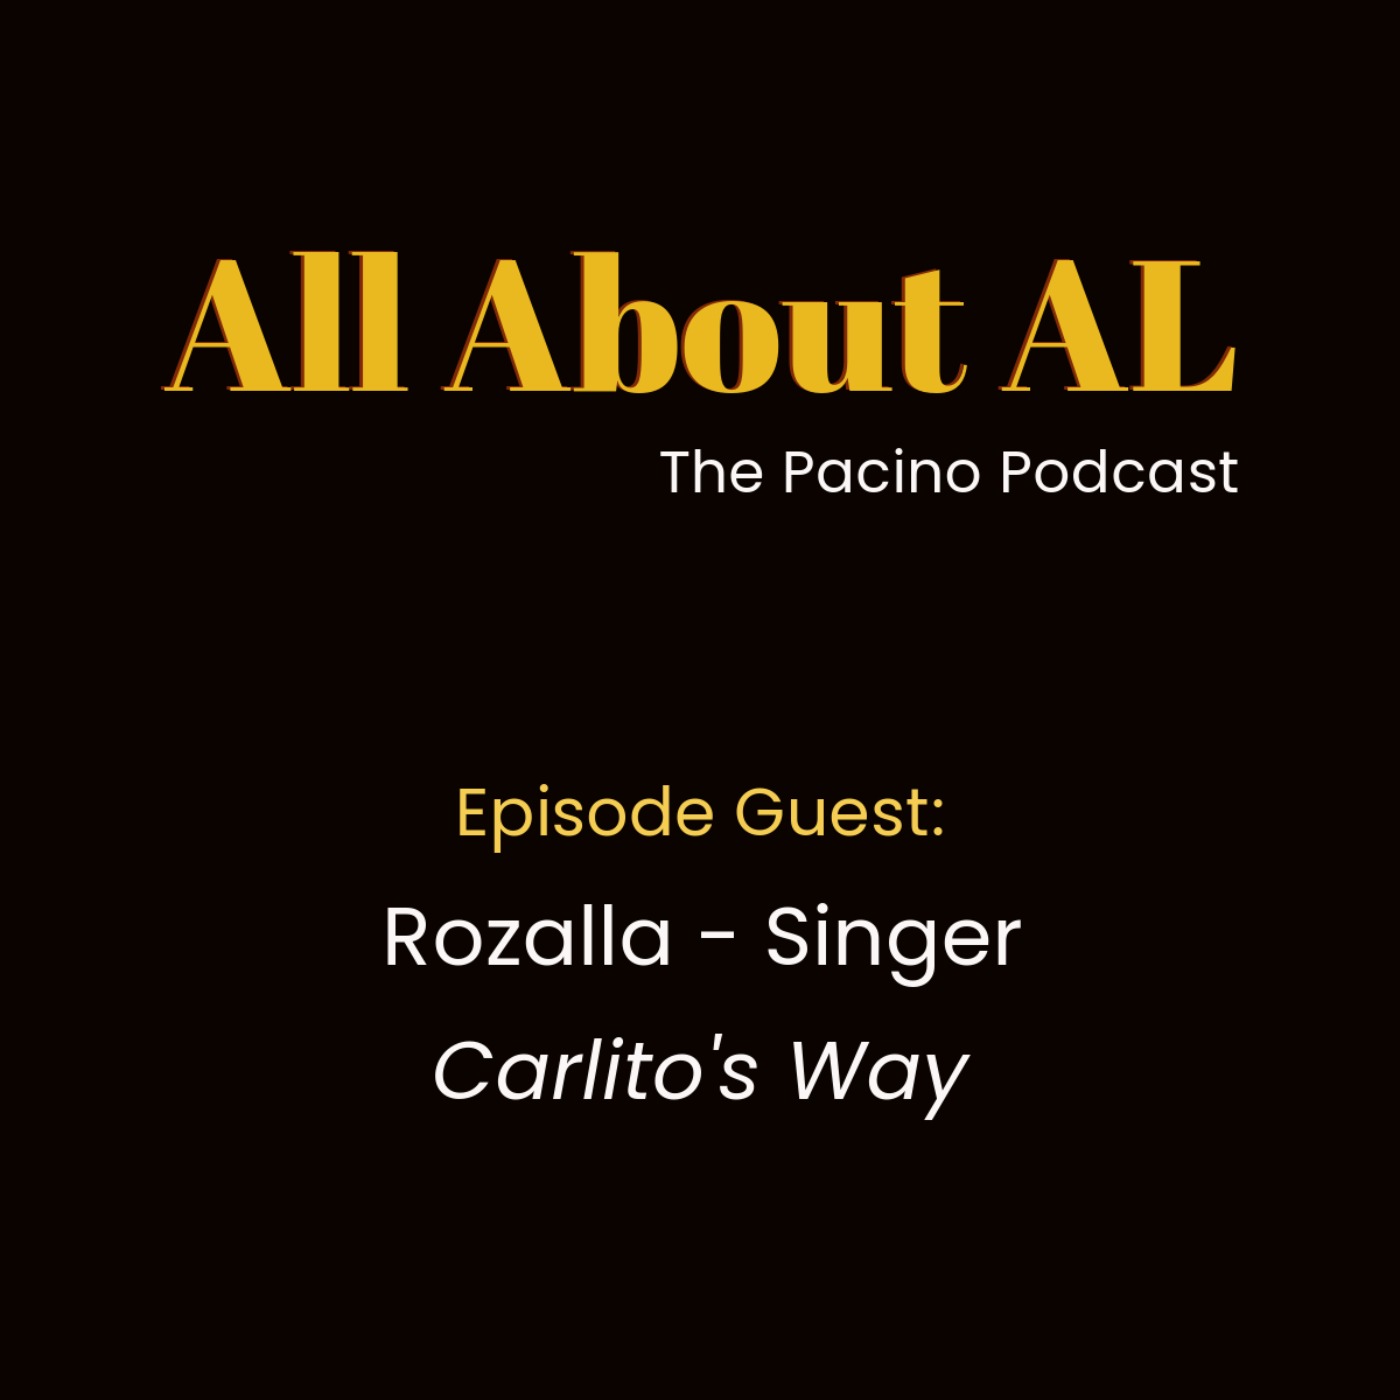 Episode 8: Carlito's Way with Rozalla